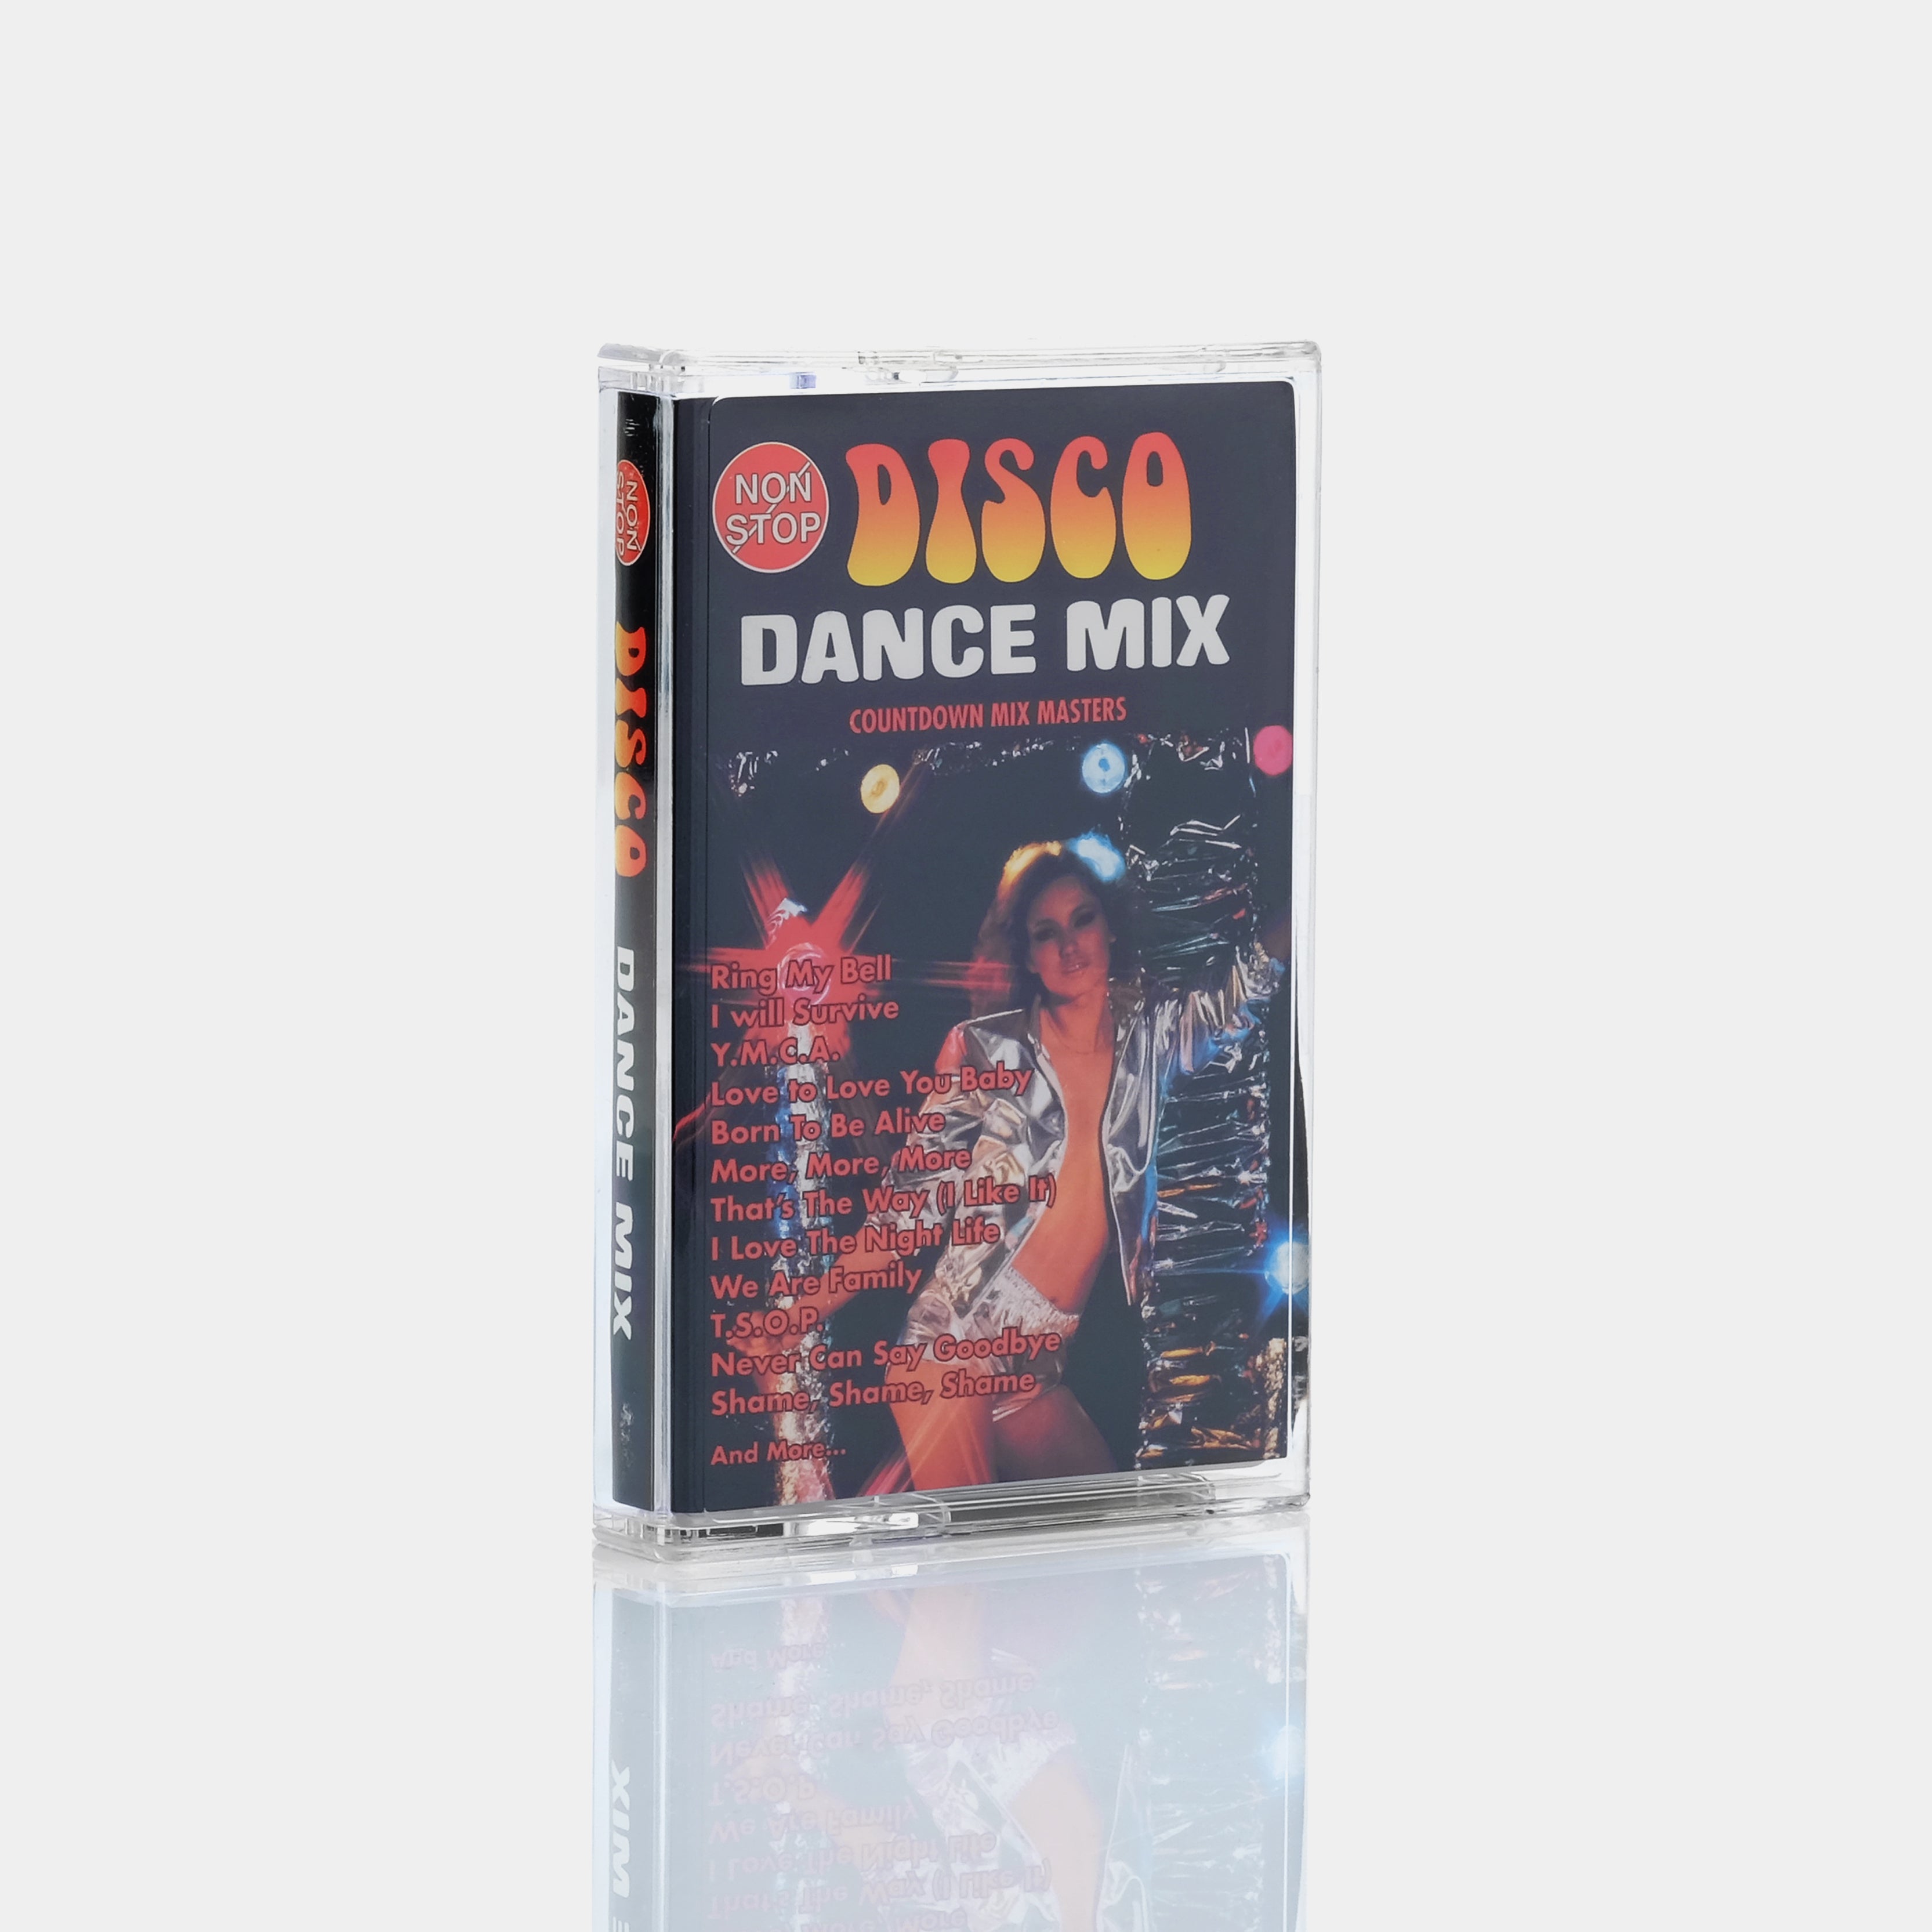 Countdown Mix Masters - Non-Stop Disco Dance Mix Cassette Tape